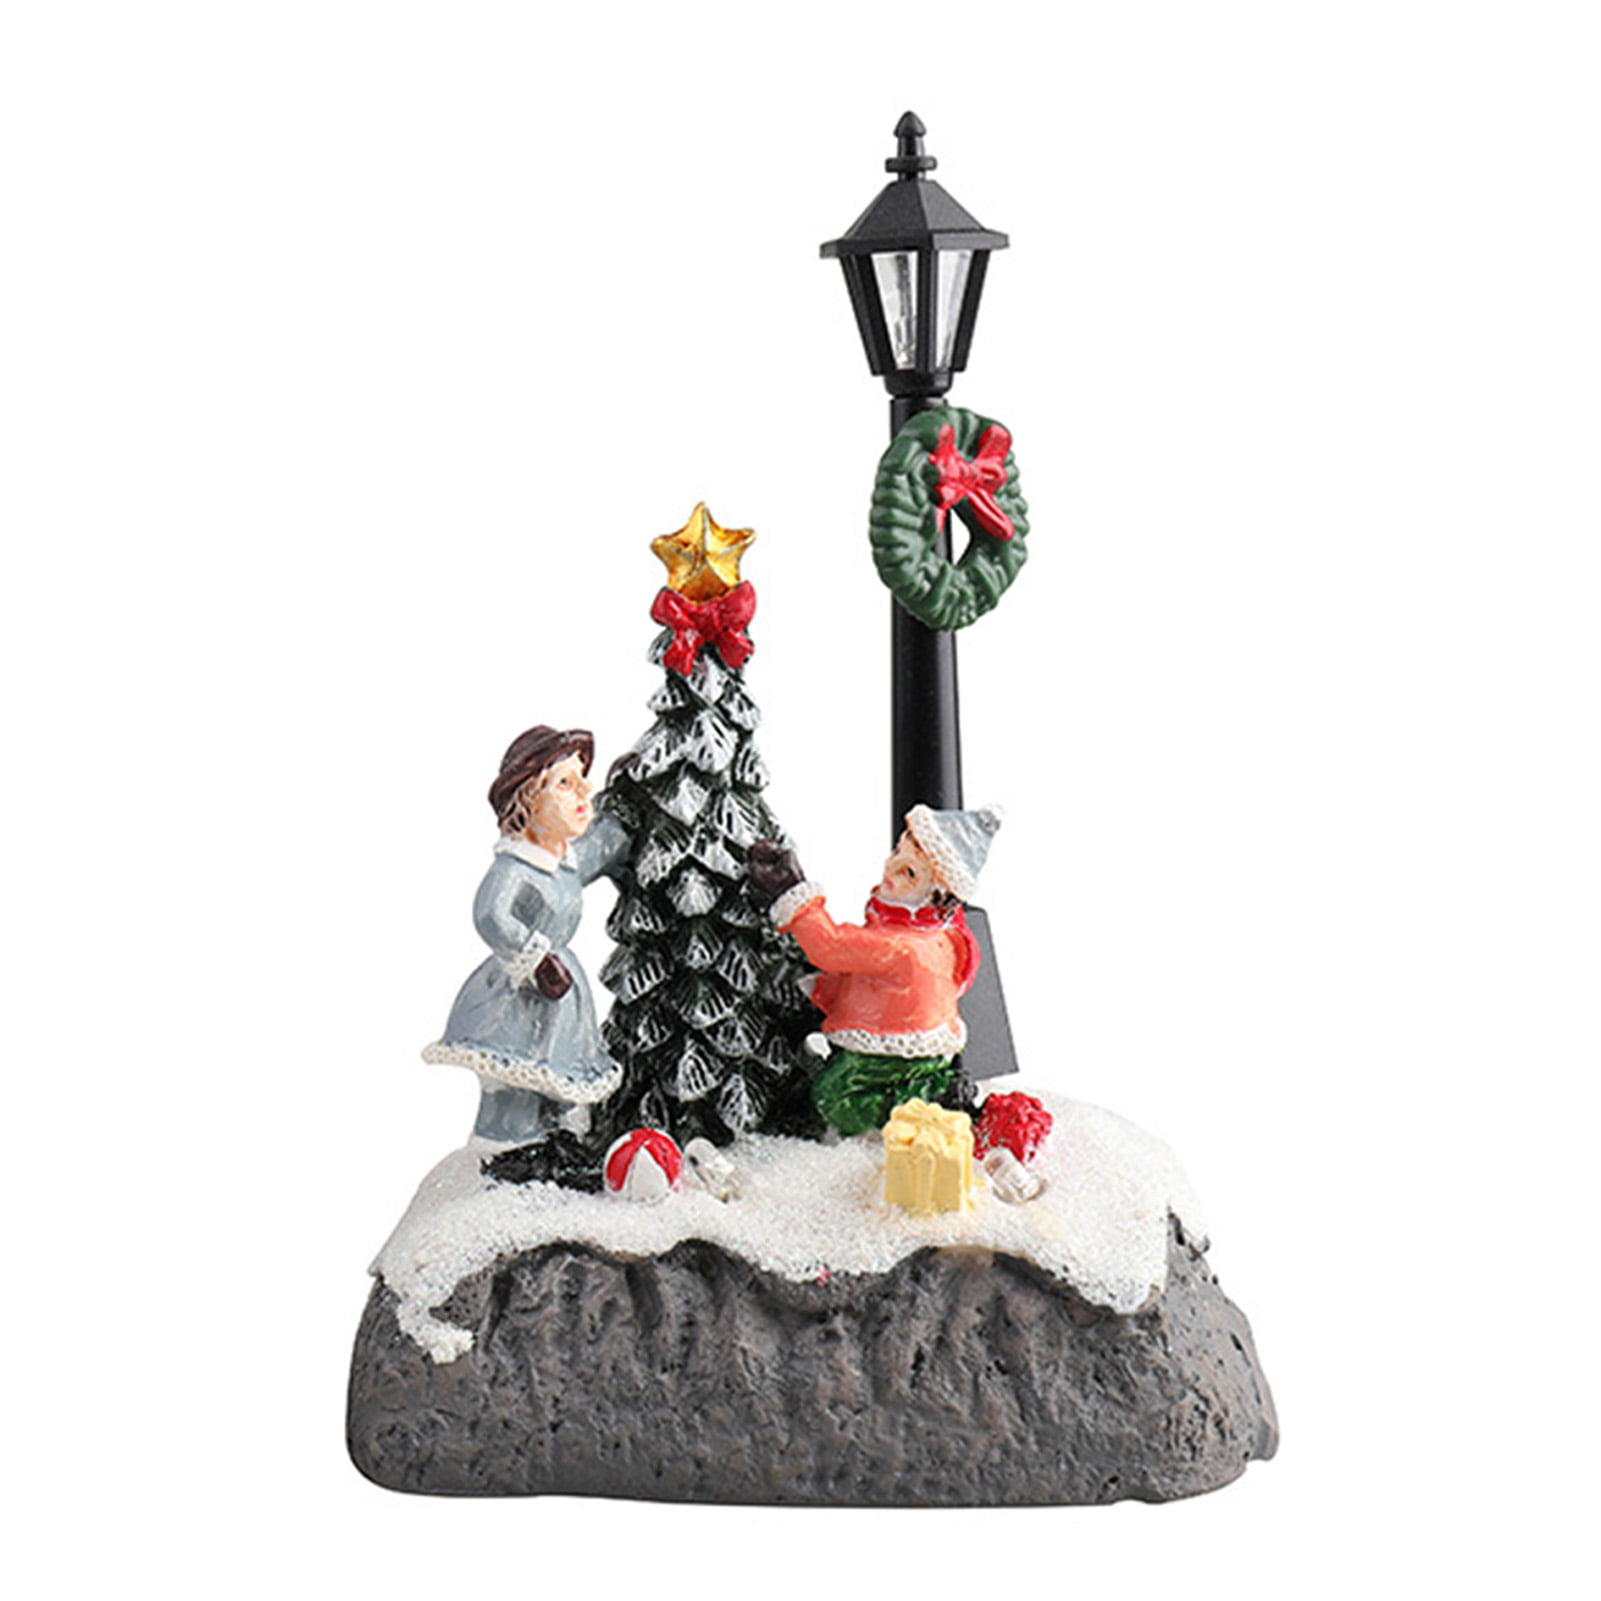 Details about   5x Tree Branch Fairy Miniature Figurine Dollhouse Garden Ornament Decoration 